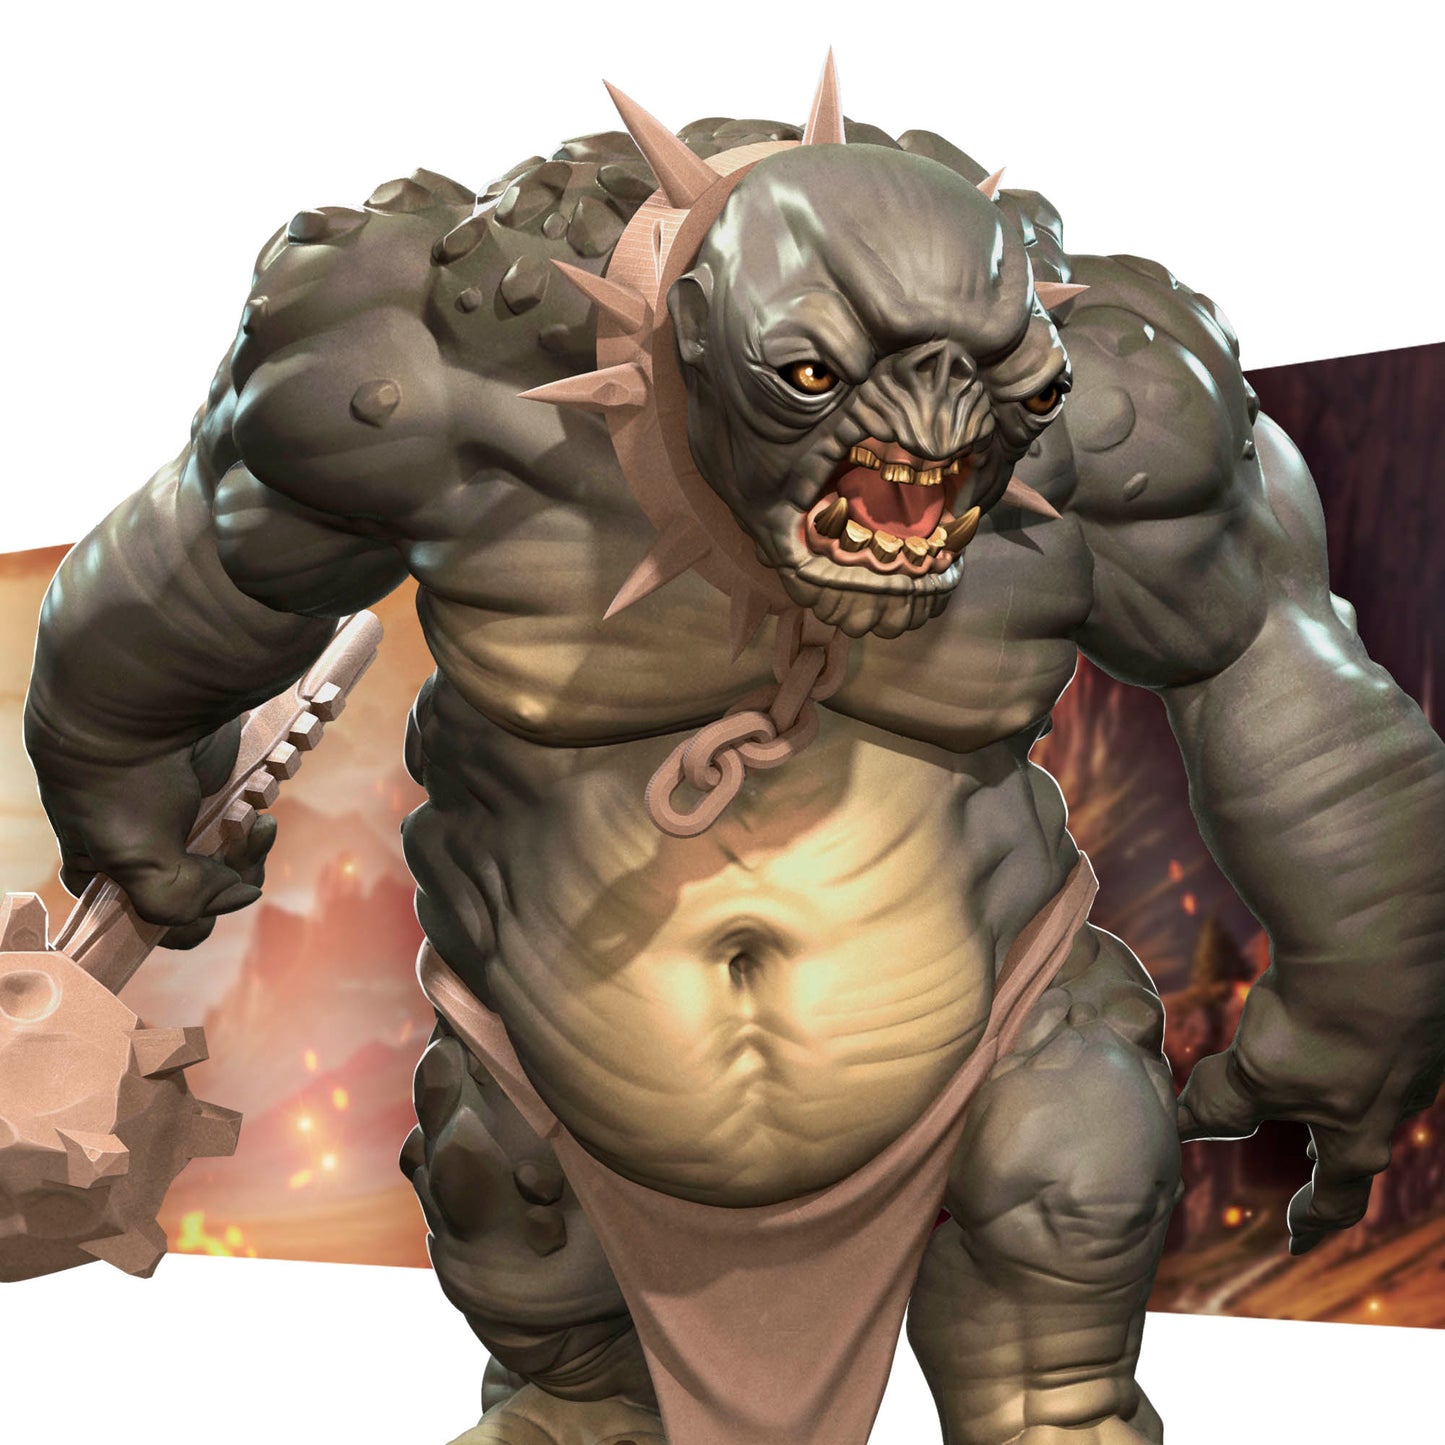 Trolls, Battle and Cave | D&D Miniature TTRPG Character | Bite the Bullet